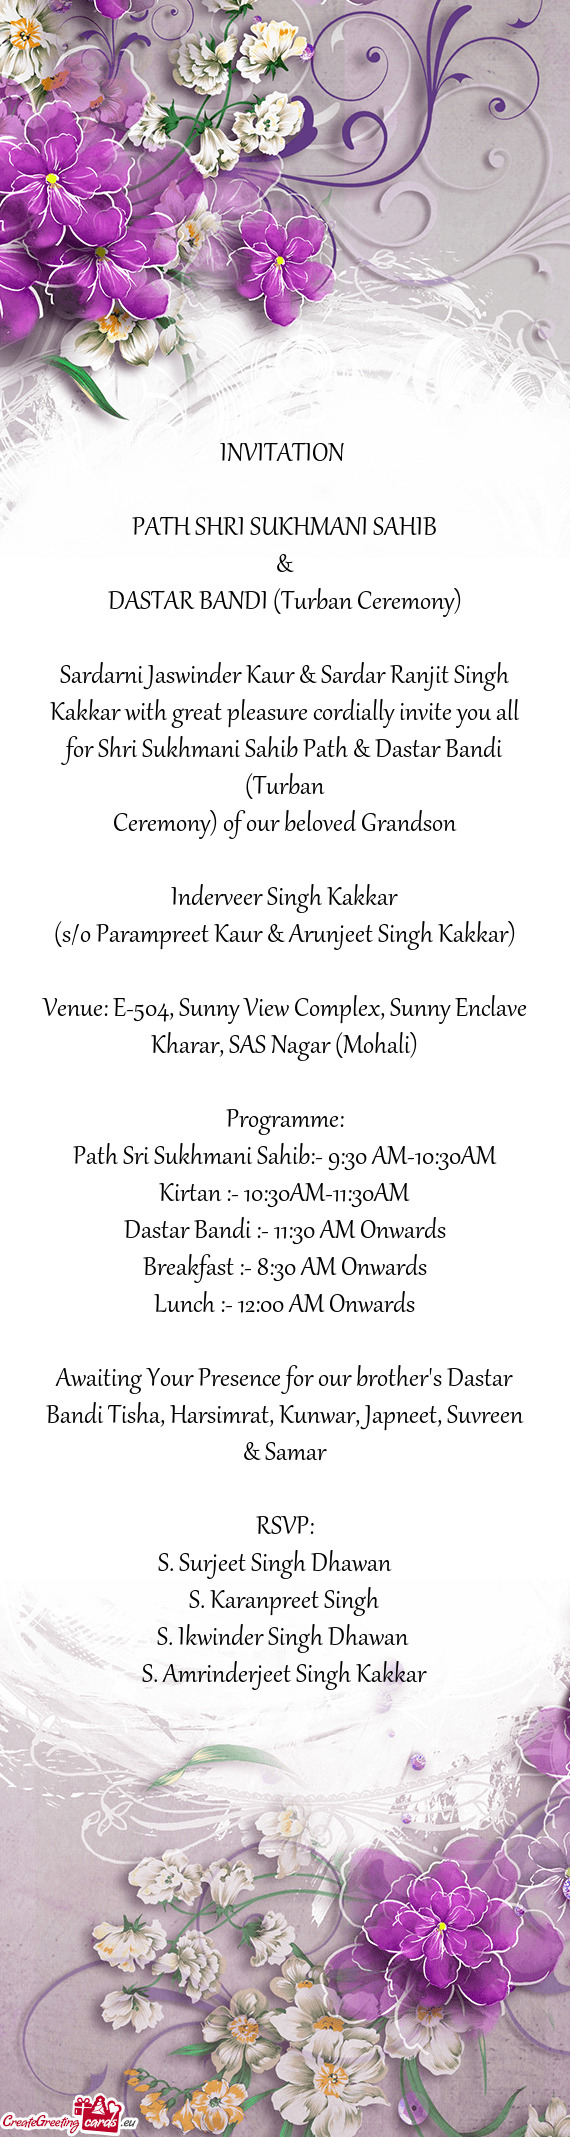 Sardarni Jaswinder Kaur & Sardar Ranjit Singh Kakkar with great pleasure cordially invite you all fo